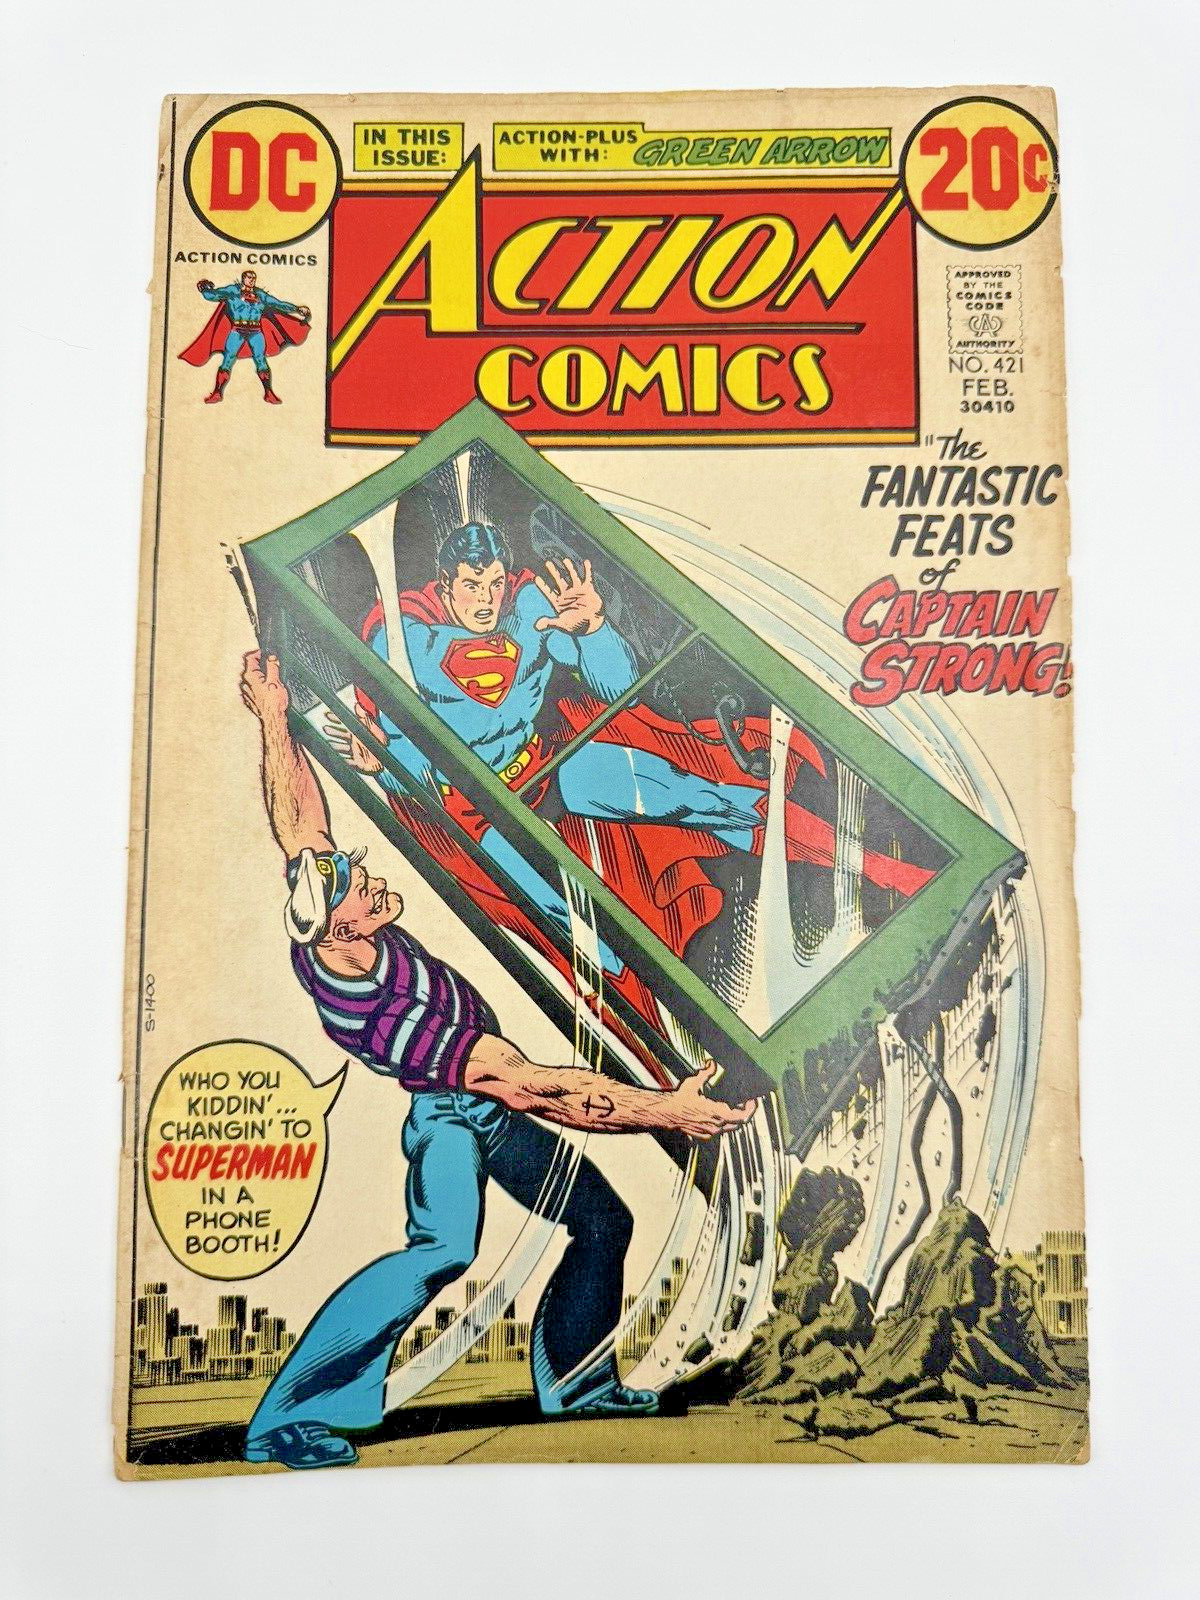 DC COMICS ACTION COMICS CAPTAIN STRONG #421 1973